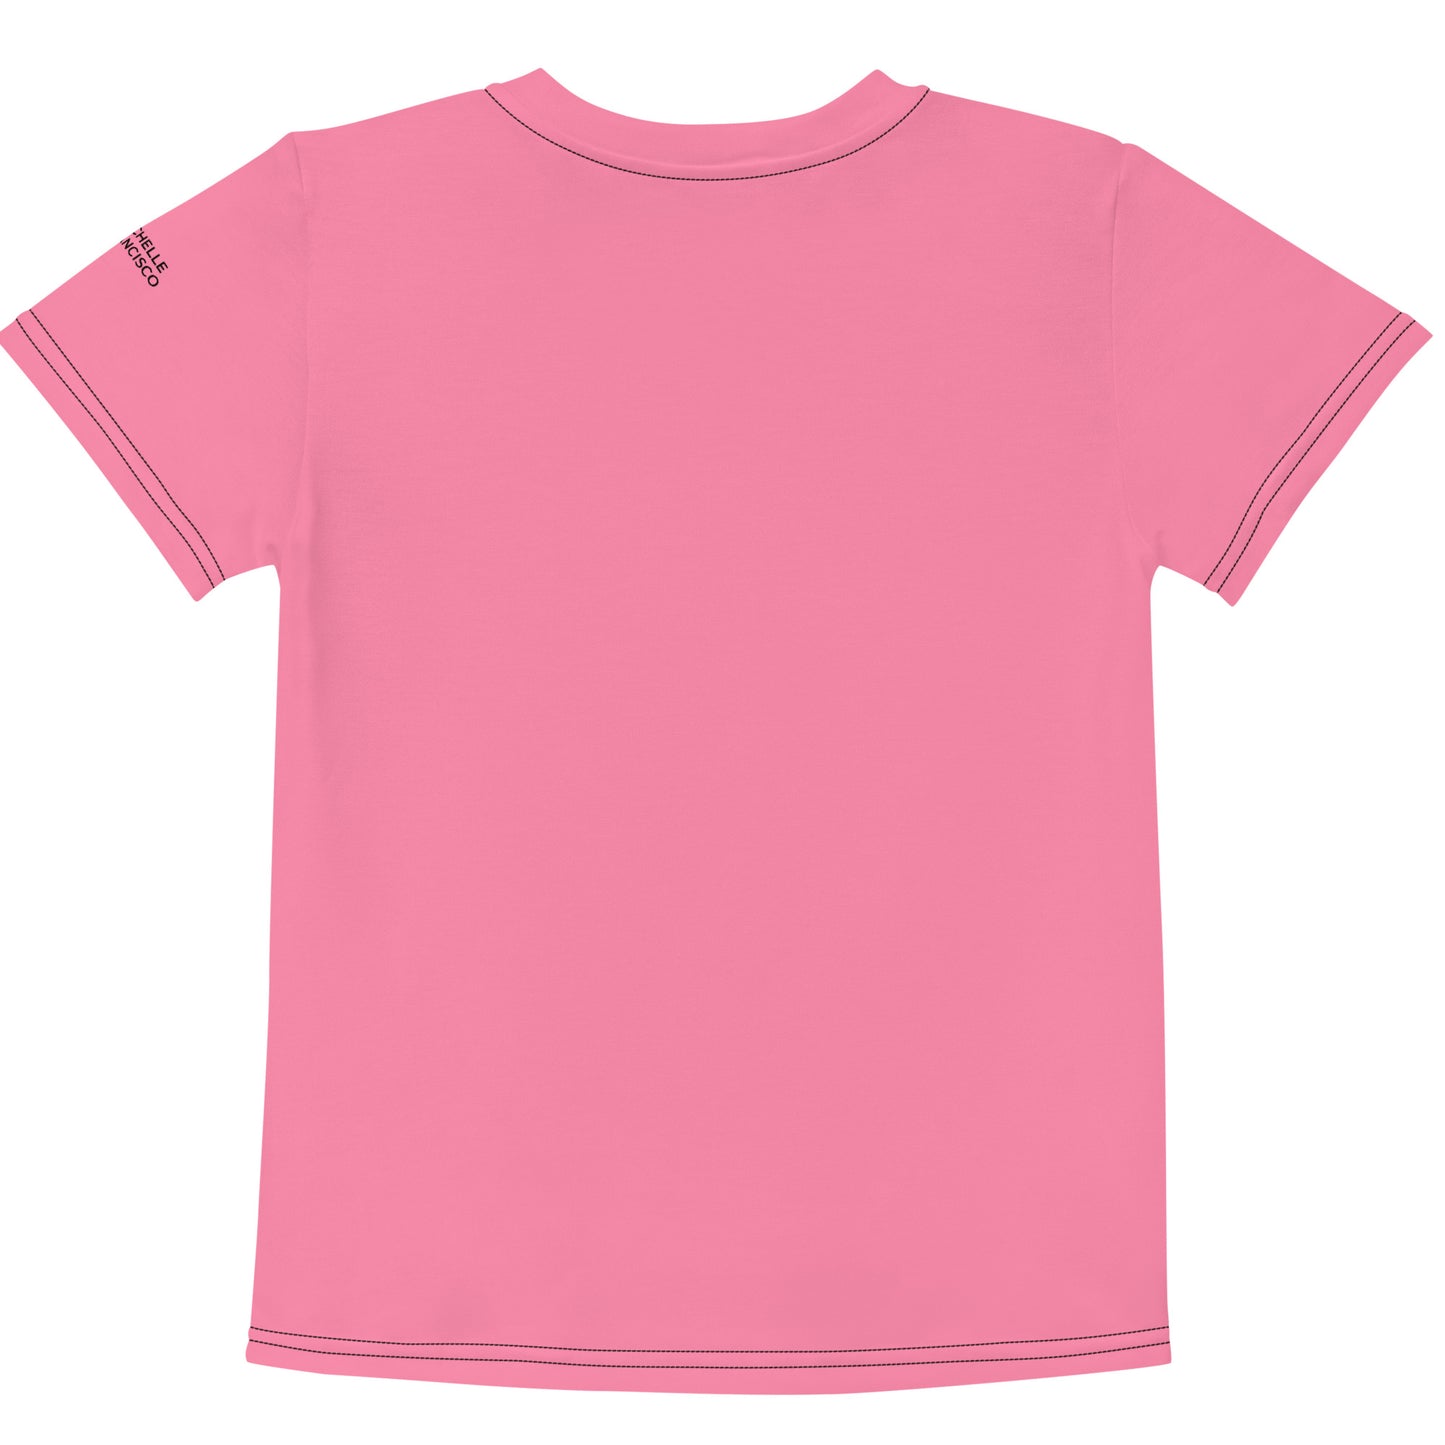 Tickle Me Pink Kids Crew Neck T-shirt